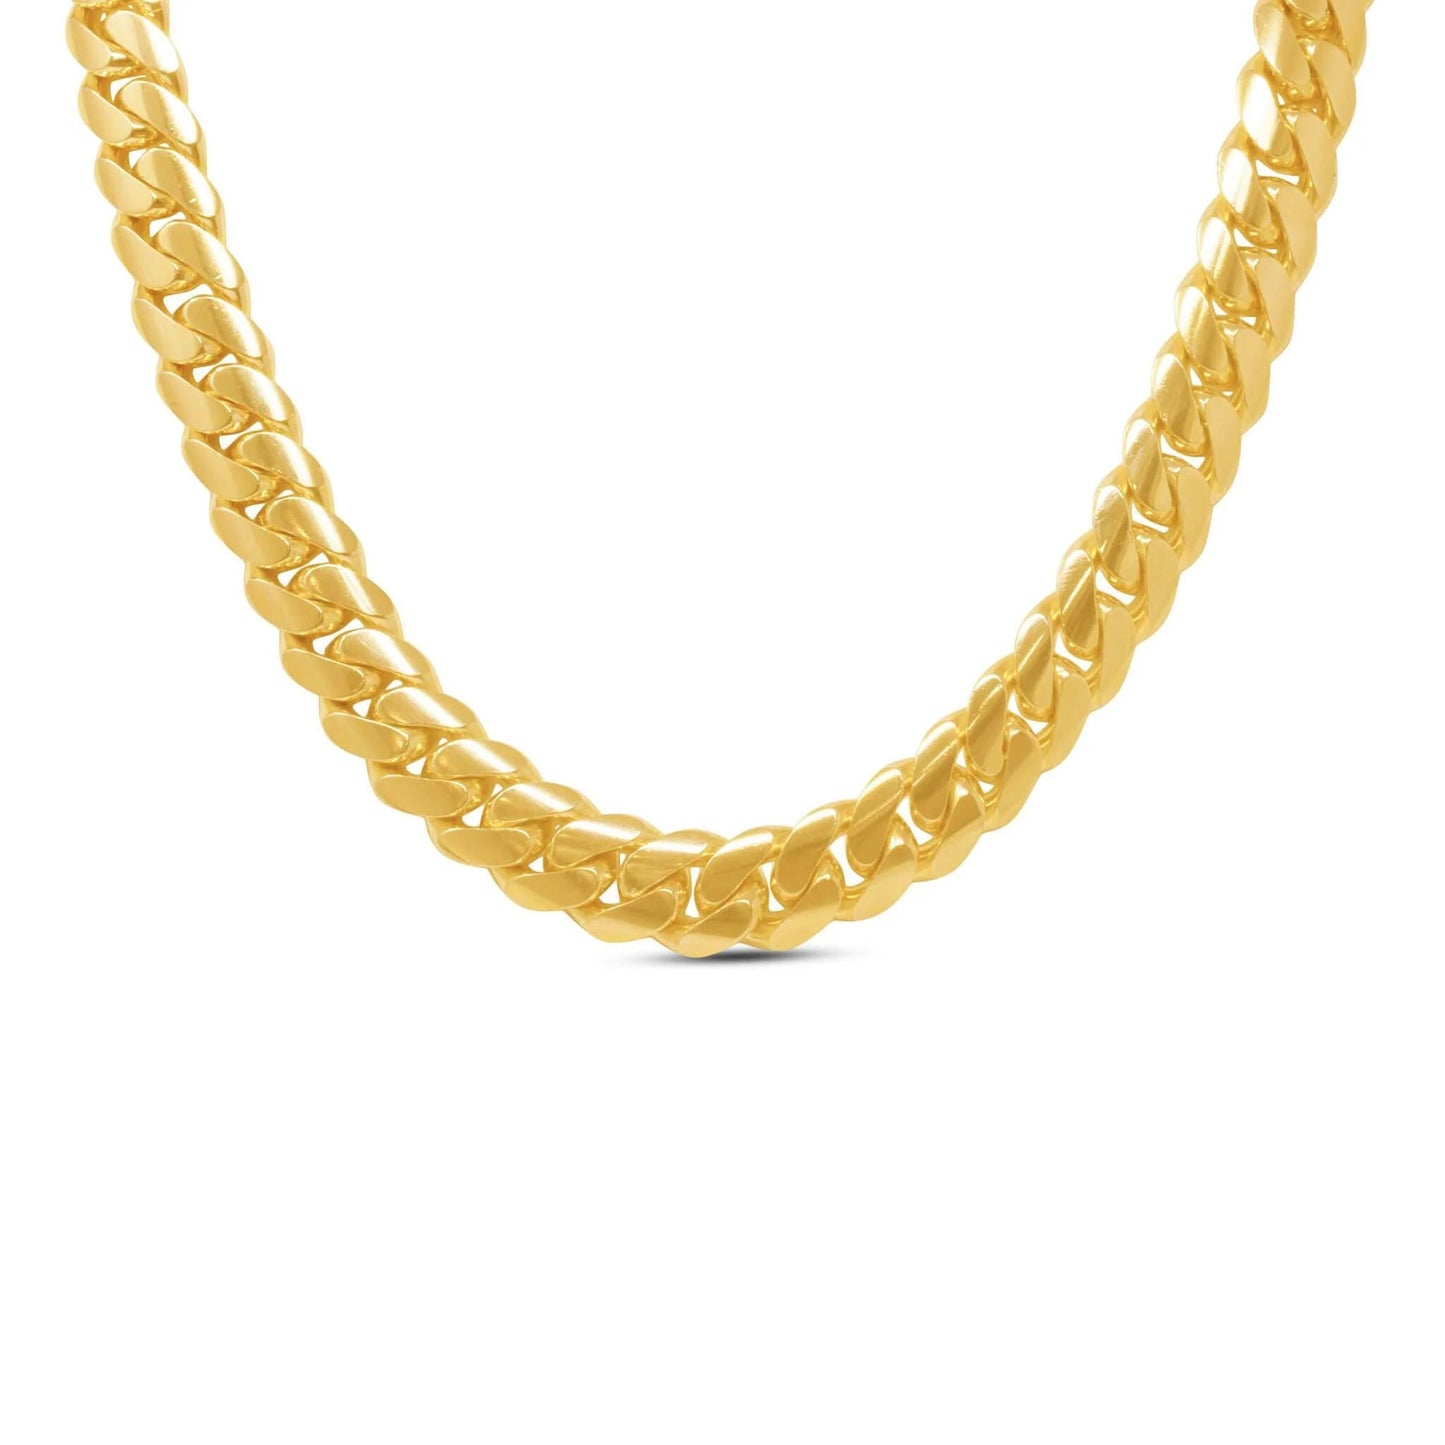 13mm Miami Cuban Link Chain in 10K Solid Yellow Gold - Vera Jewelry in Miami